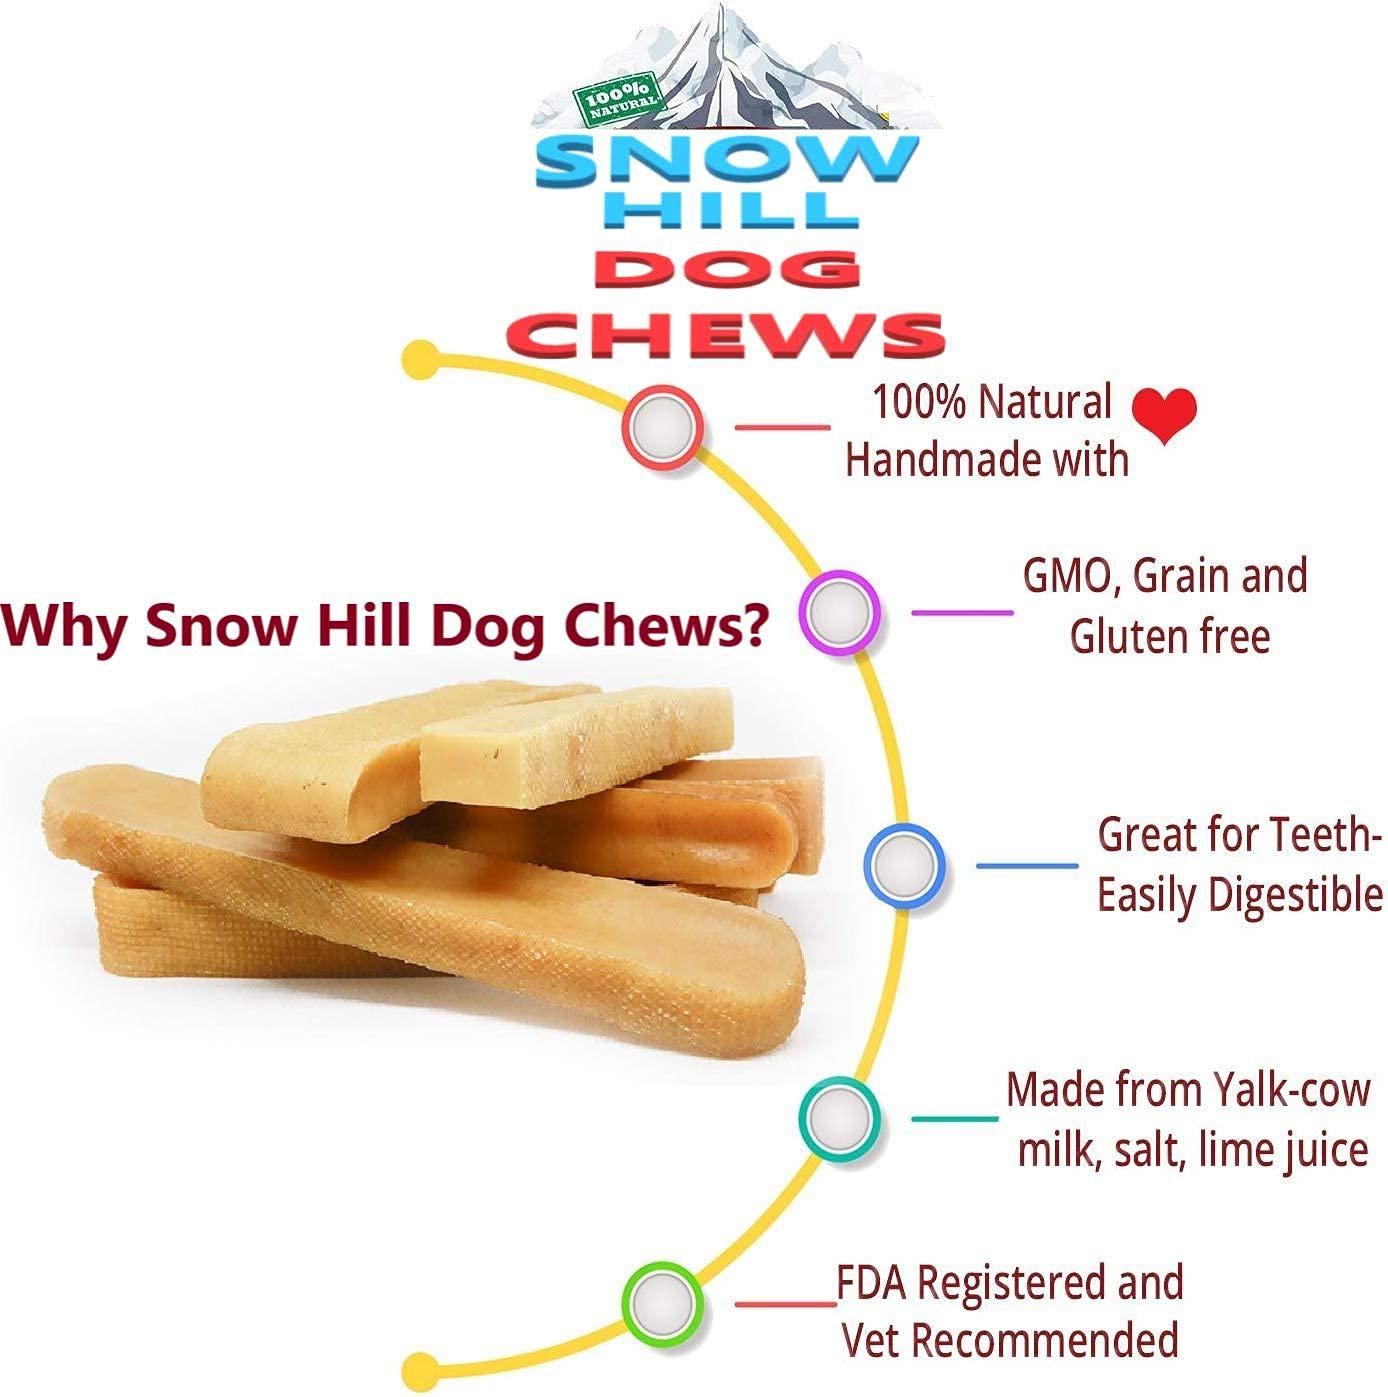 Snow Hill Dog Chew snow hill himalayan yak cheese dog chews xxl 7.5-8 oz long lasting natural organic protein-rich yaky golden cheese dog treats